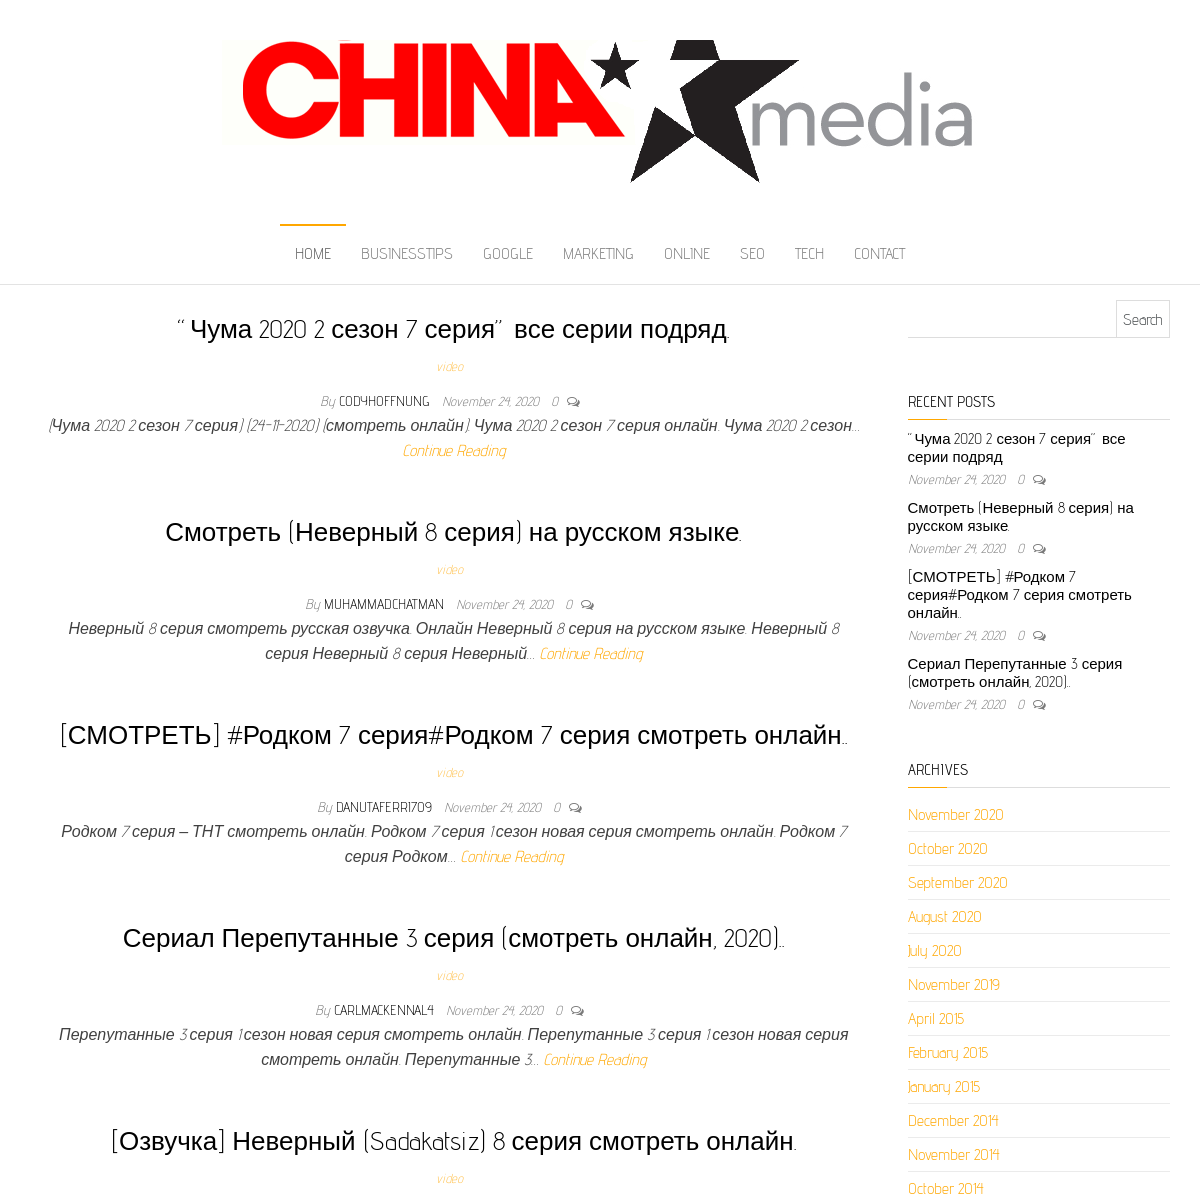 A complete backup of chinastarmedia.com